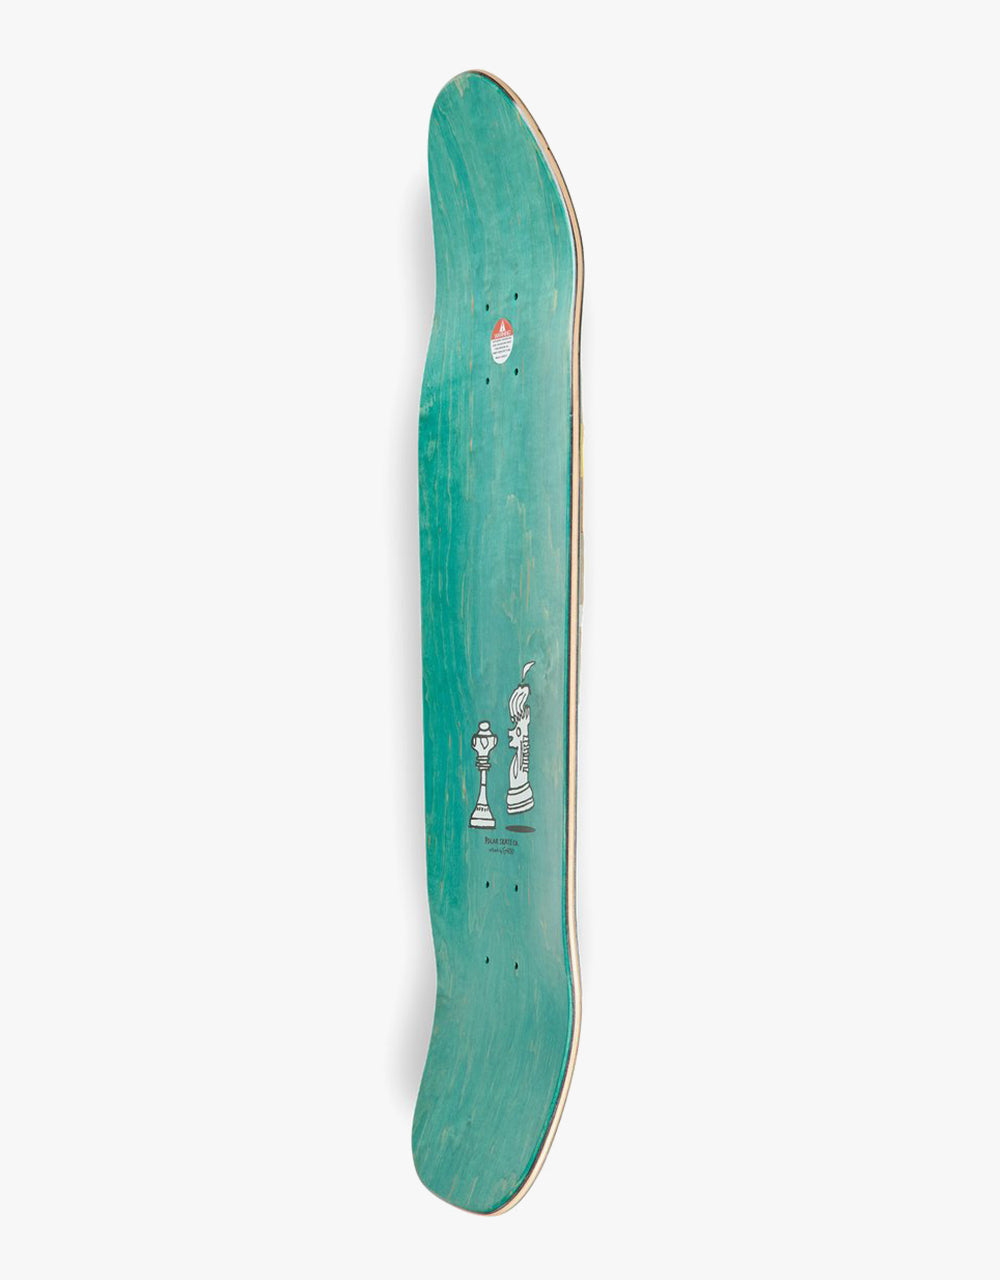 Polar Brady Checkmate Skateboard Deck - DANE 1 Jr. Shape 8.65"